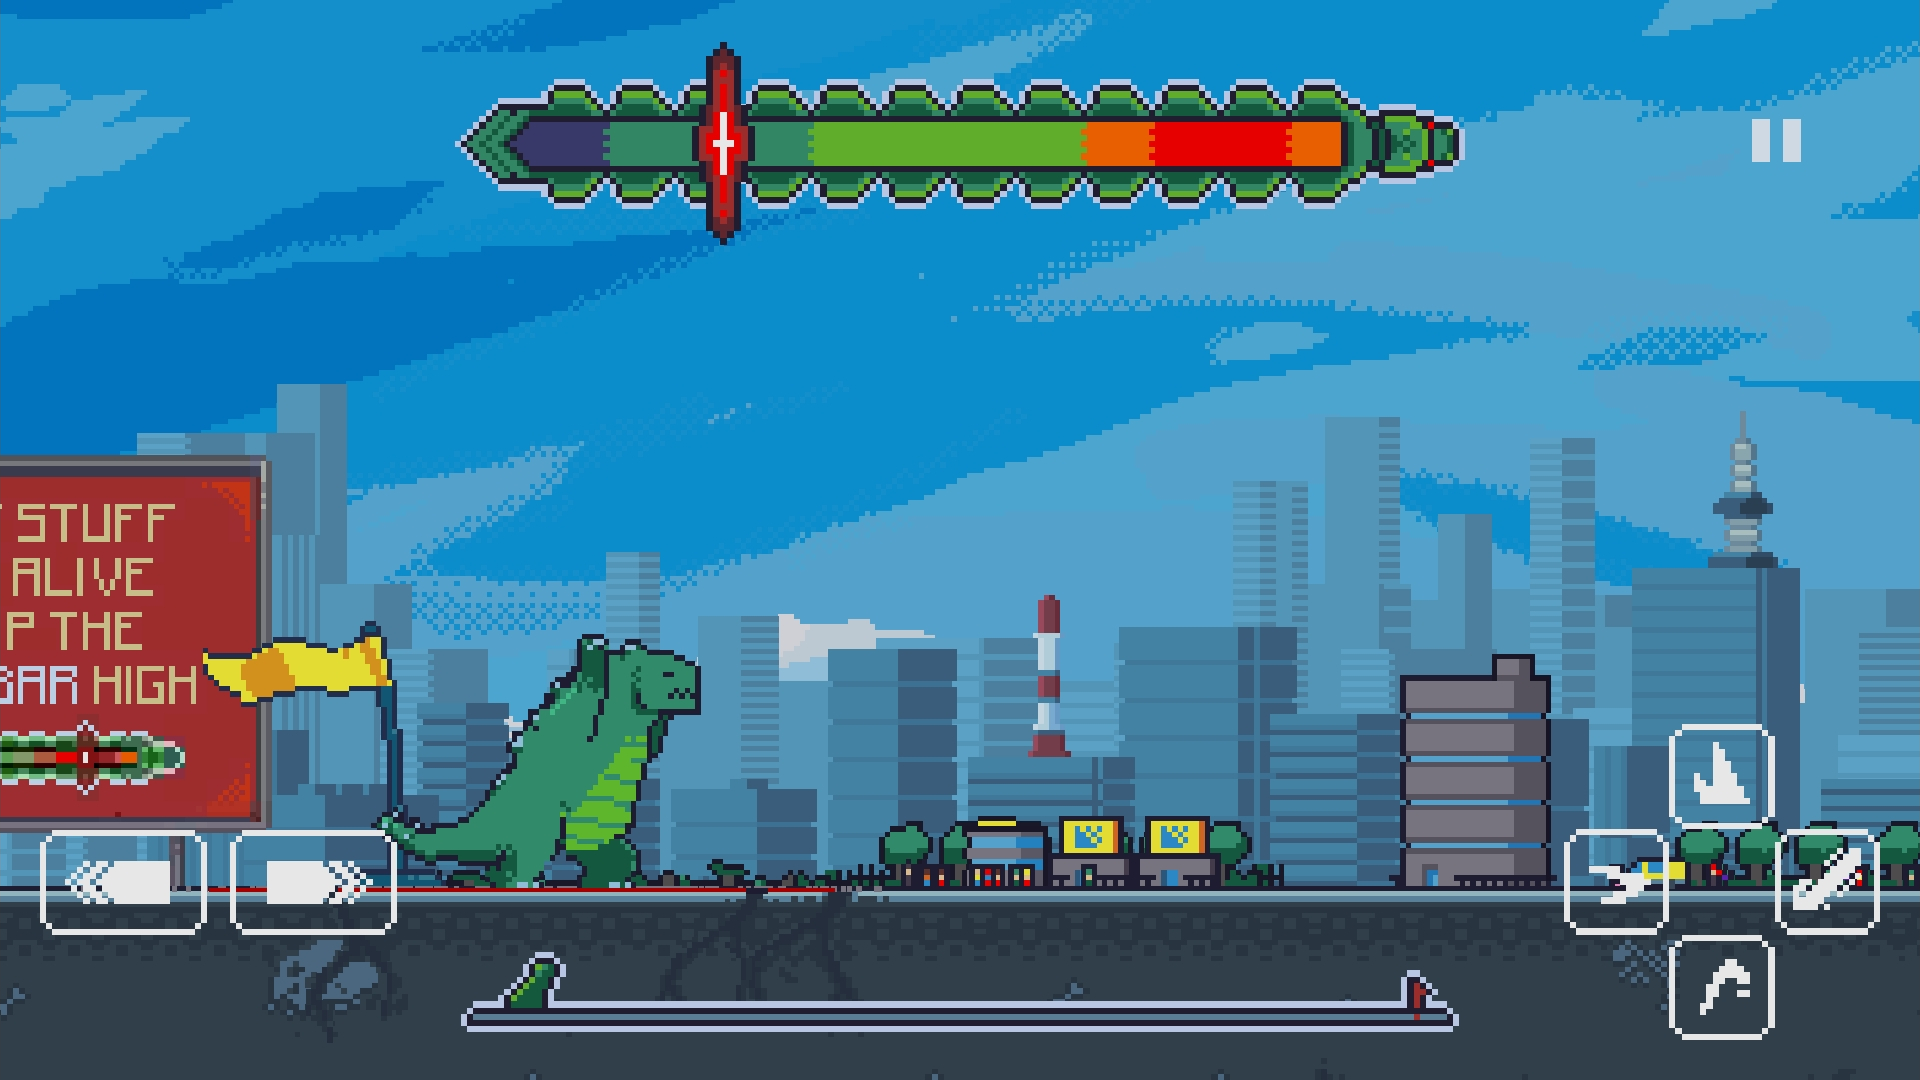 Laser Lizard - Android game screenshots.